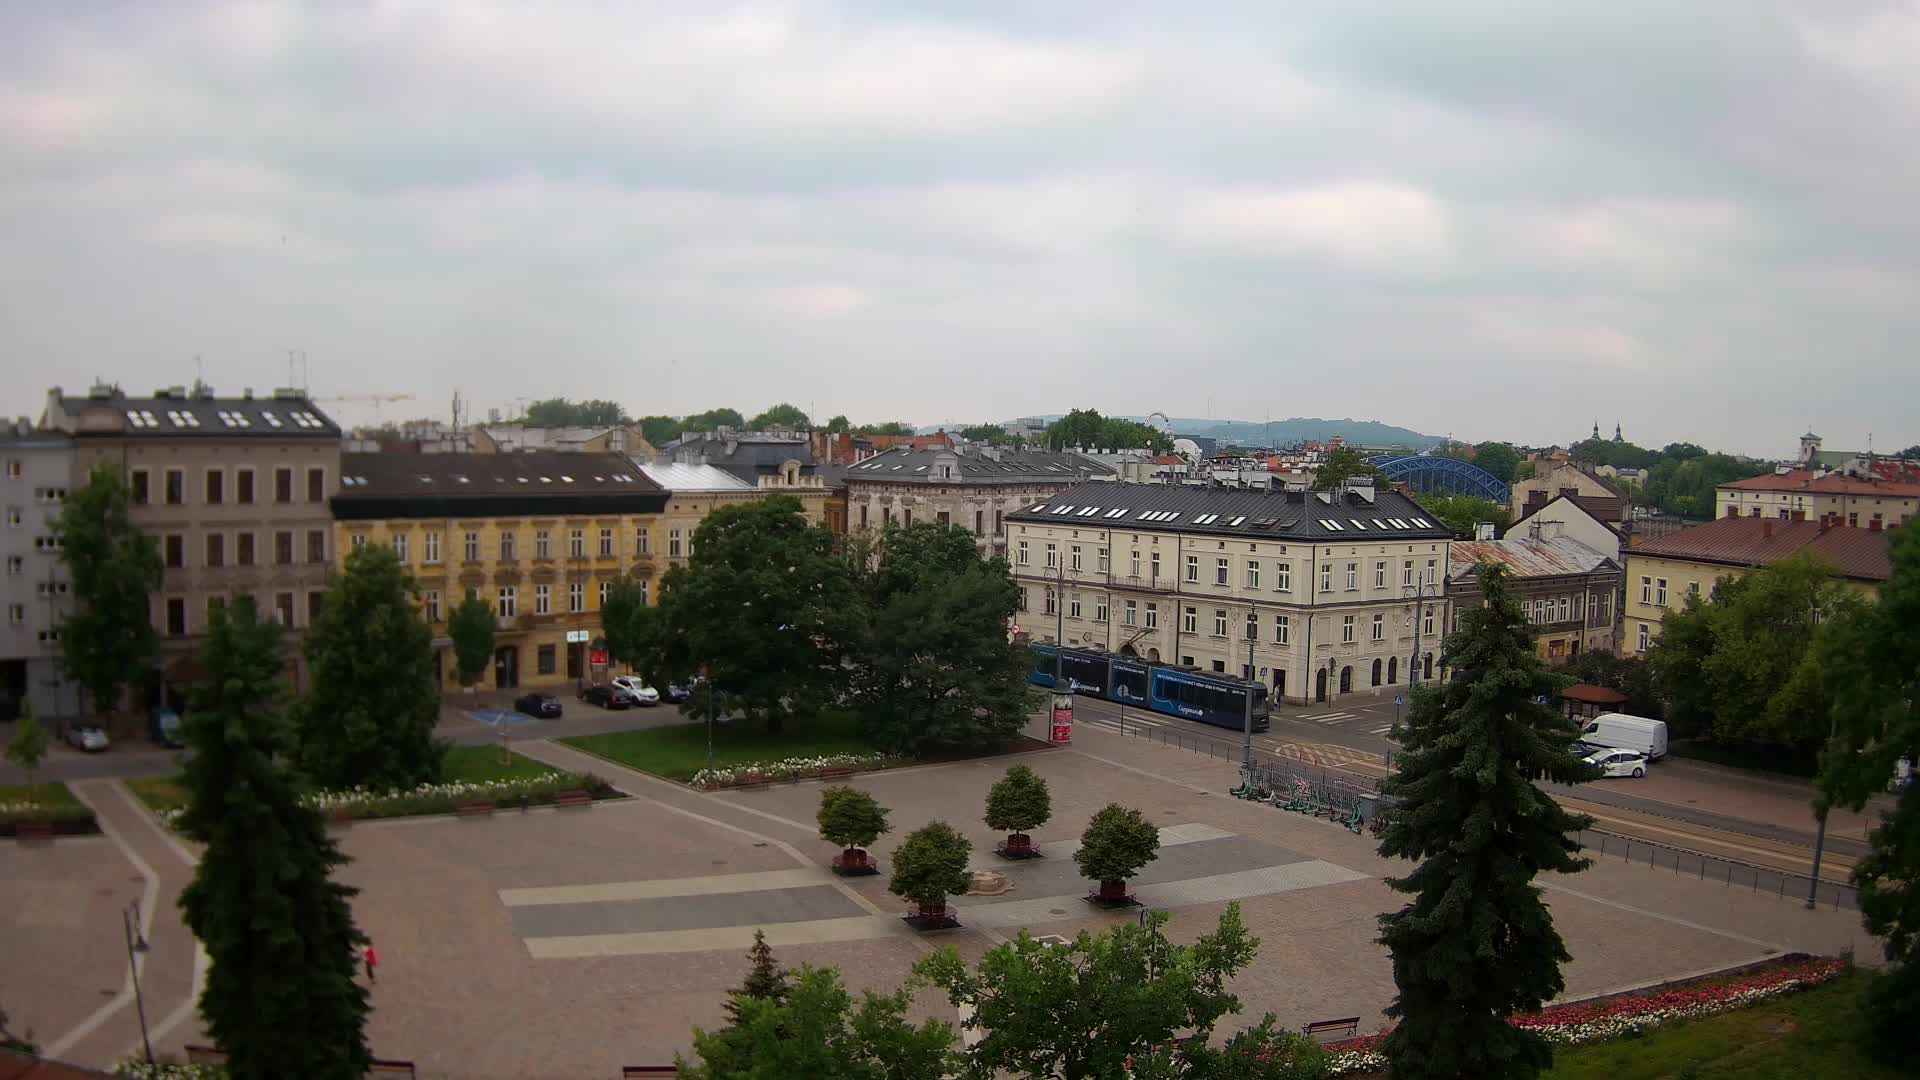 Cracovie (Krakow) Di. 06:22